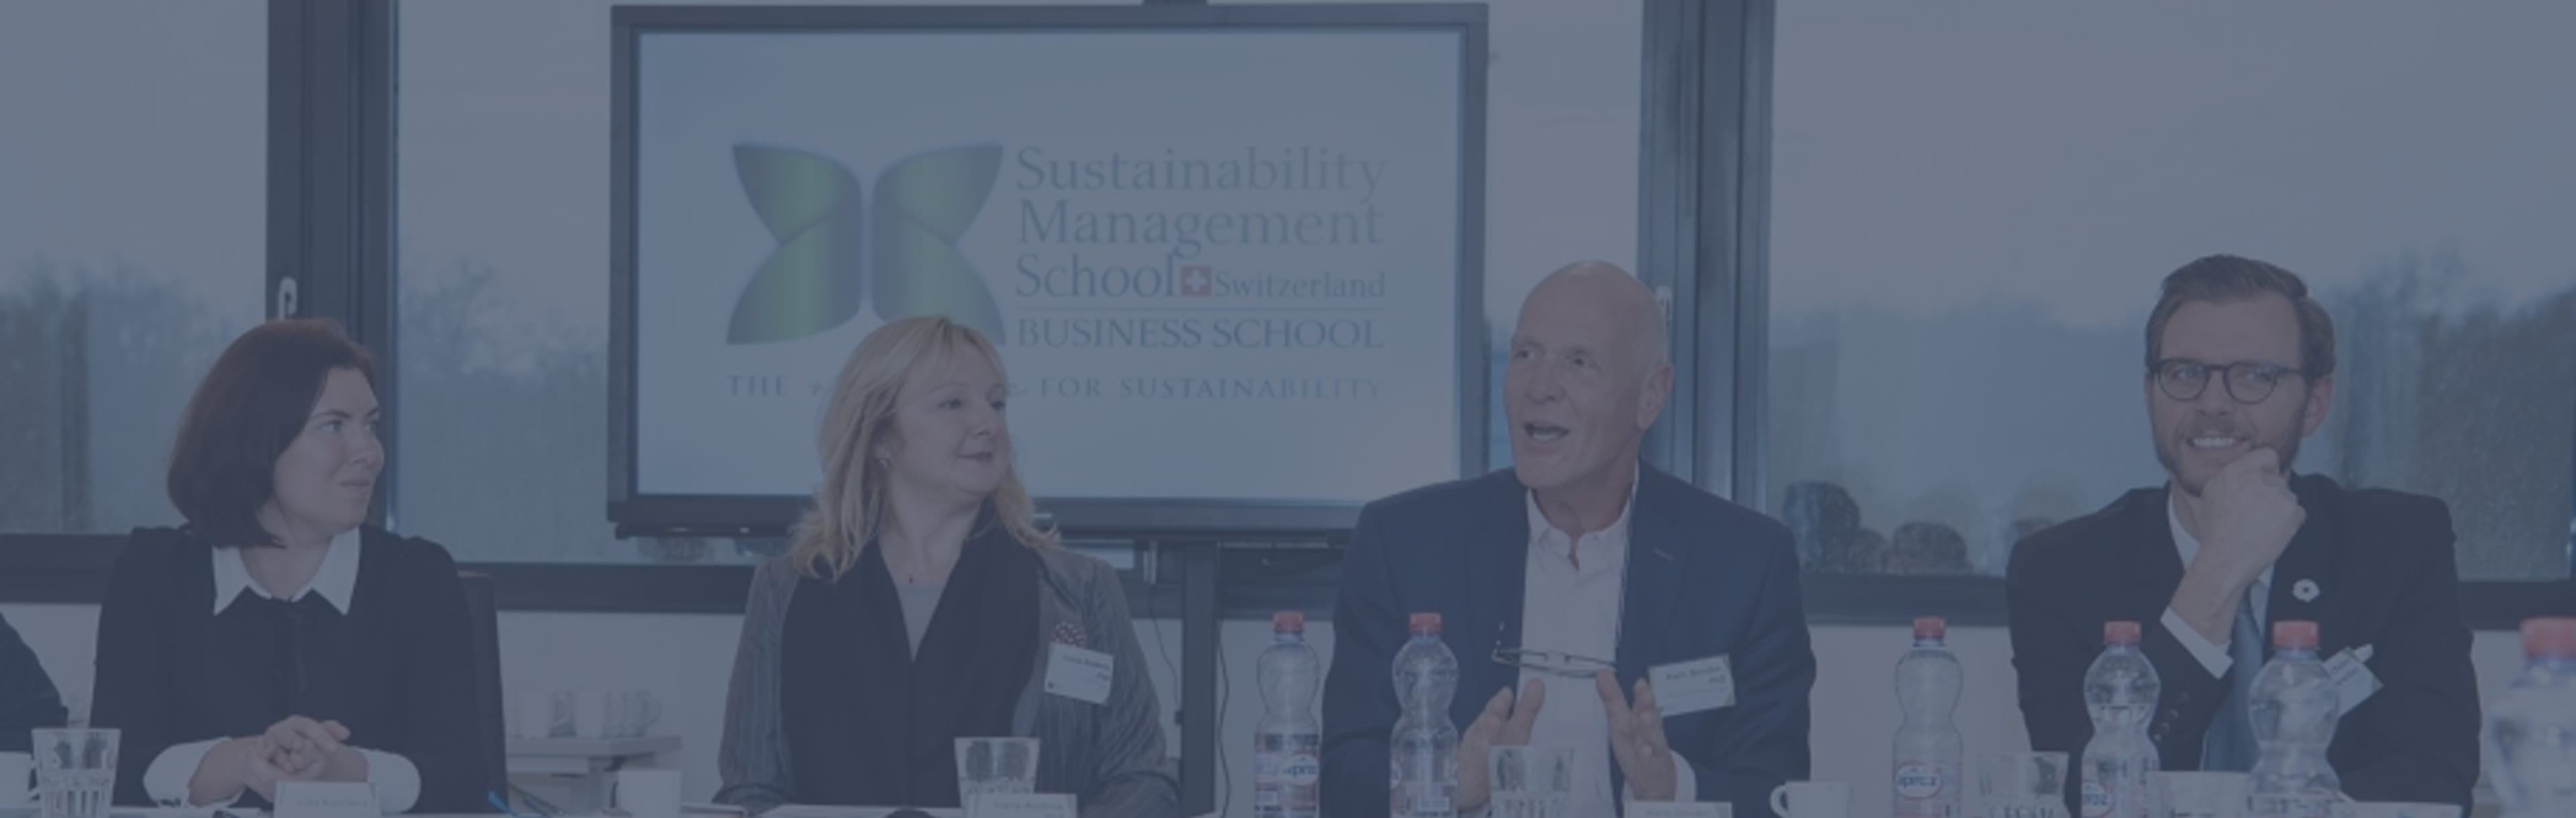 Sustainability Management School MBA in Sustainable Fashion Management